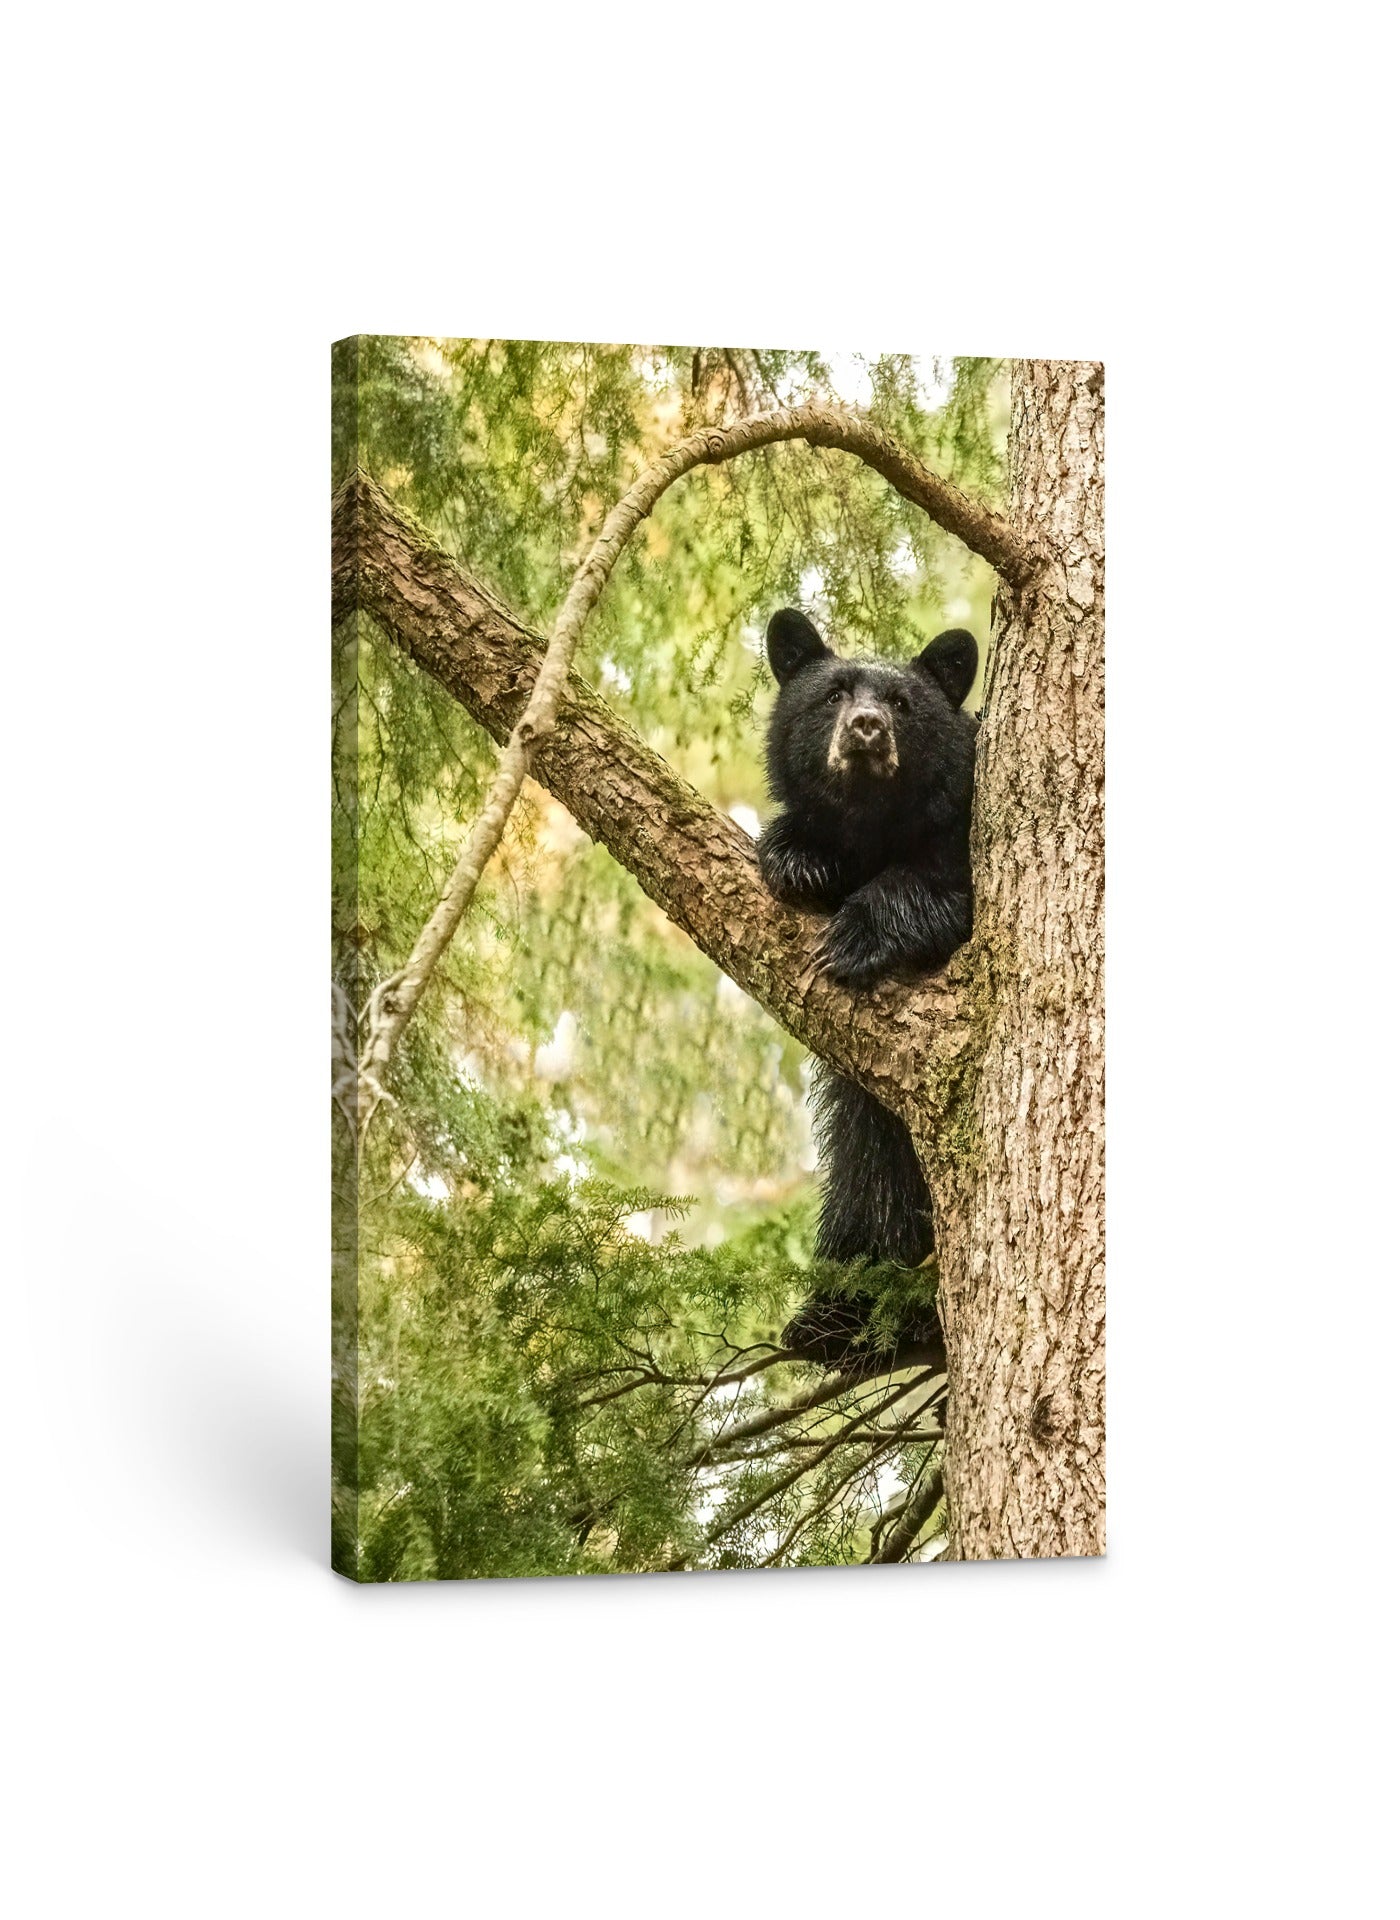 Black Bear Cub (portrait) 24x36"